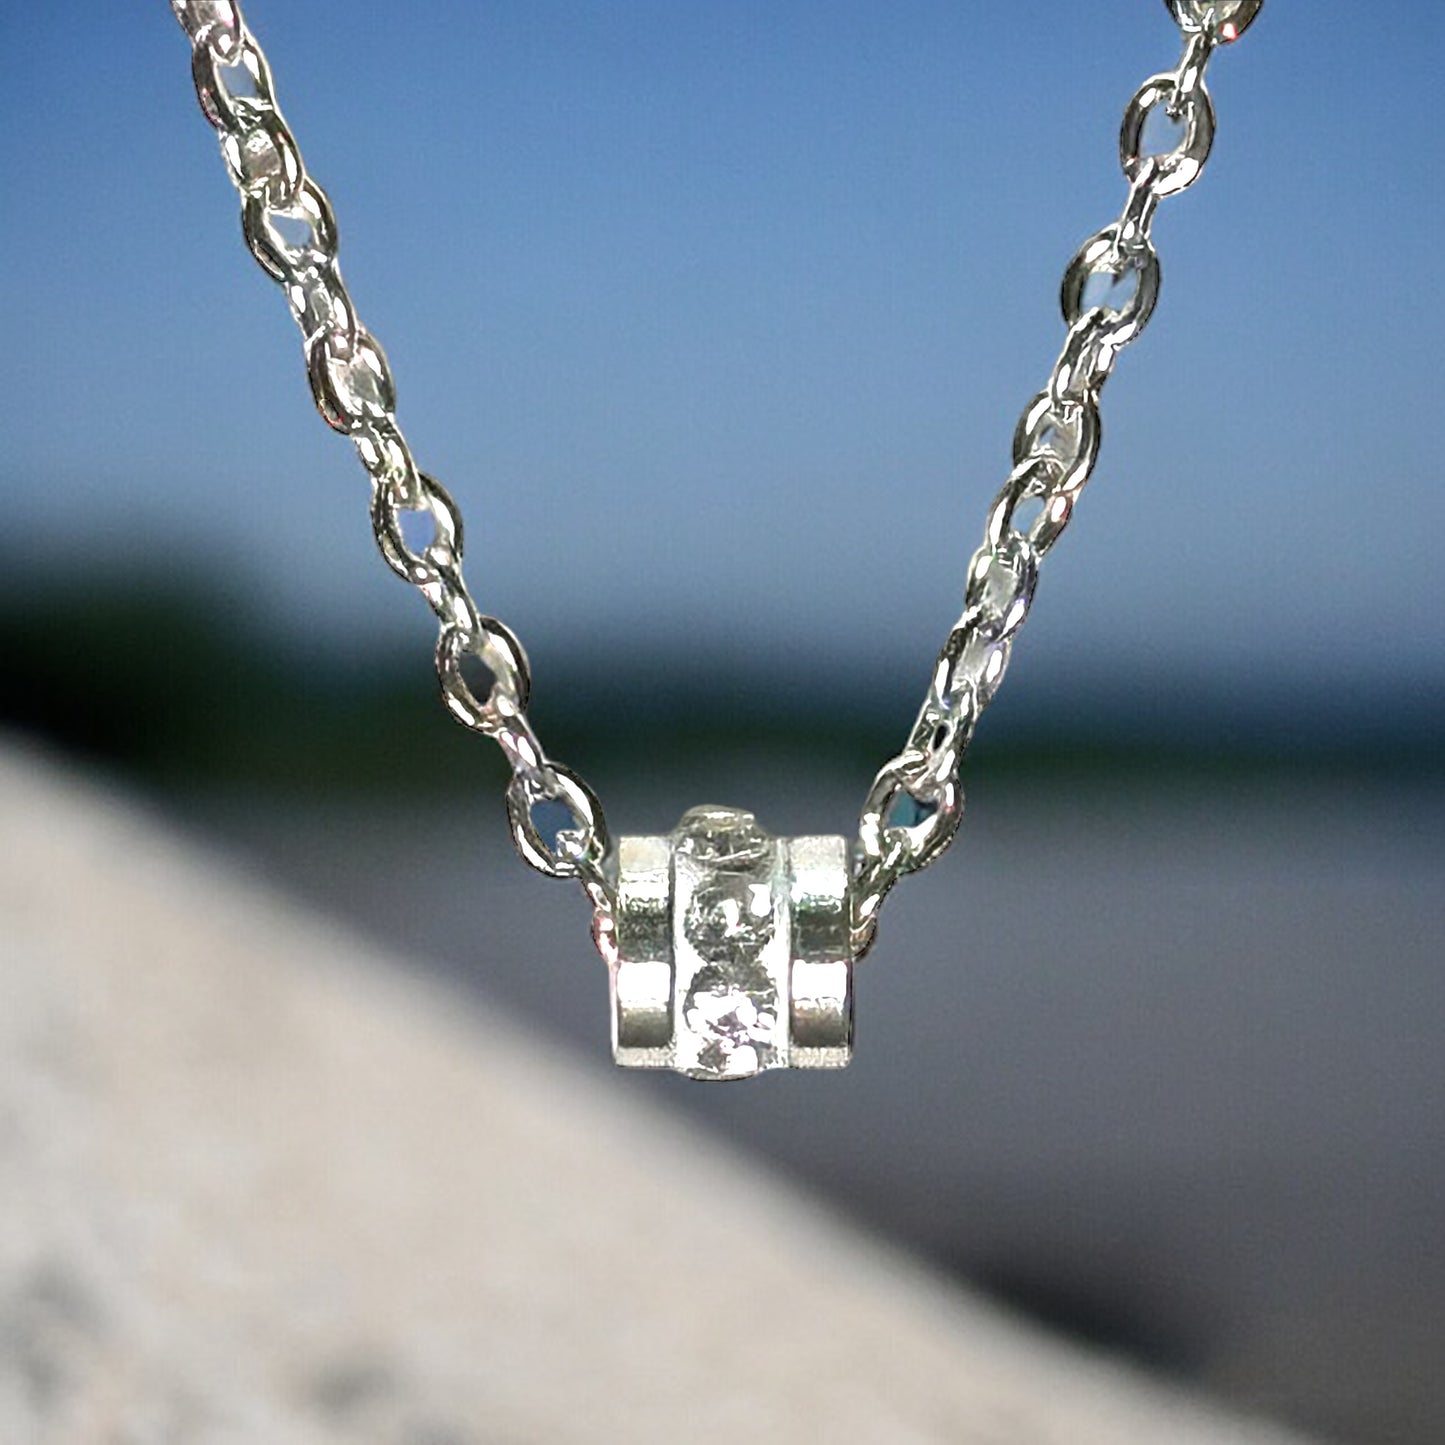 Rhinestone Bead Charm Necklace